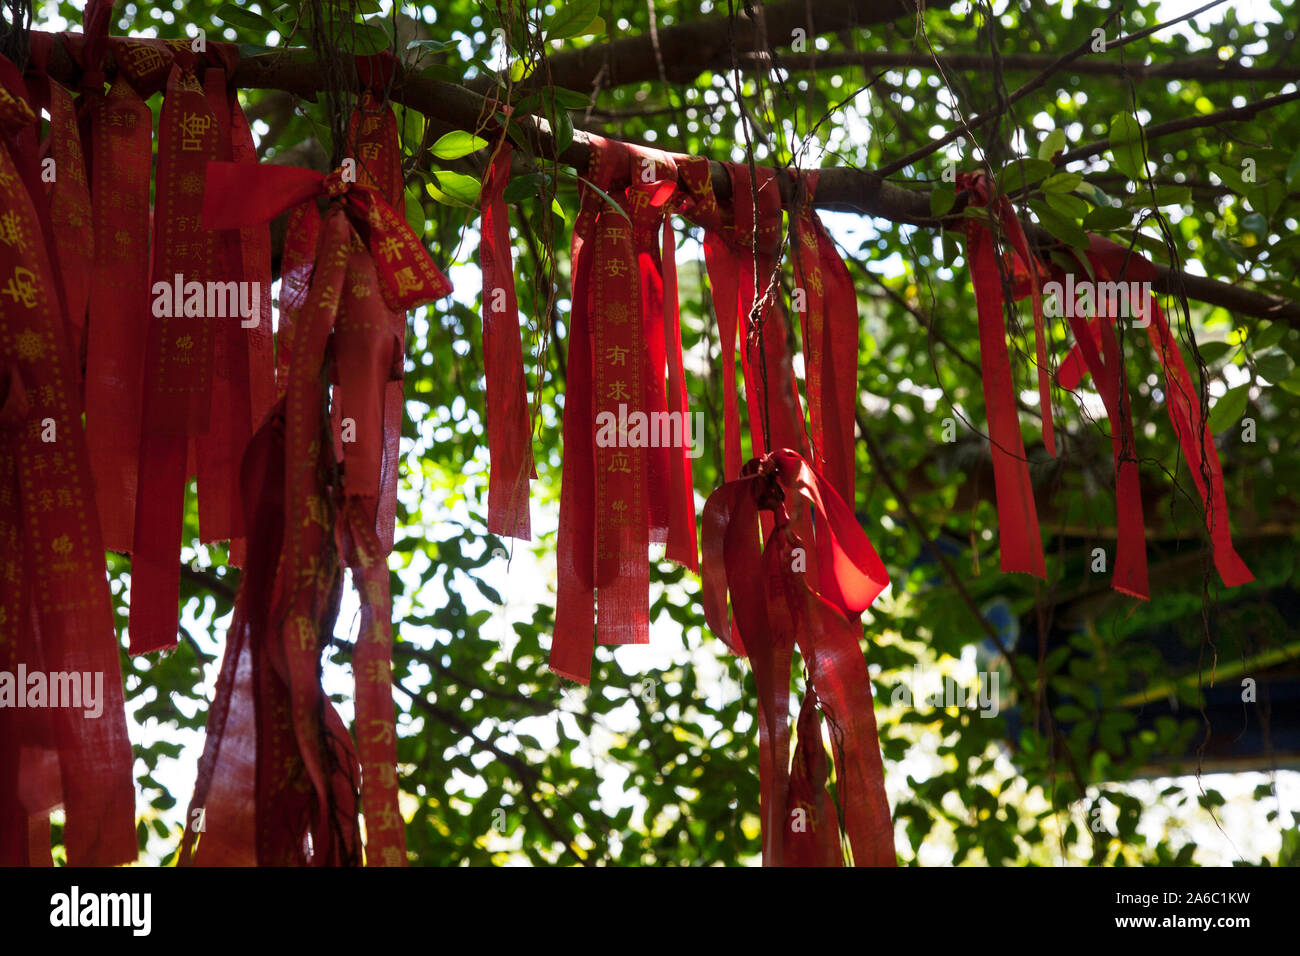 Symbols of prayer, red ribbons unite neighbors separated by virus